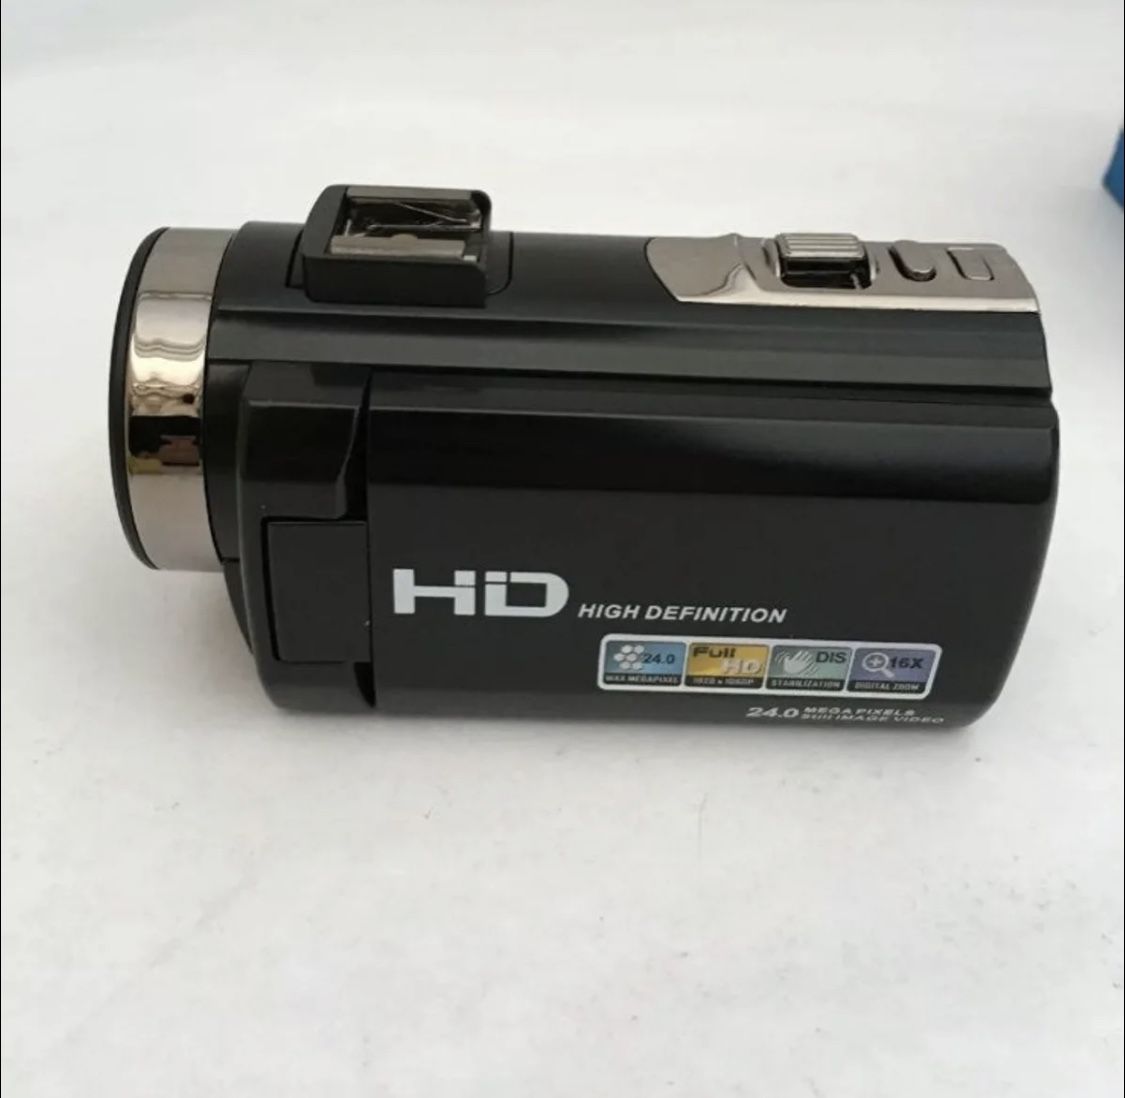 DVC Digital Video Camera Full HD High Definition